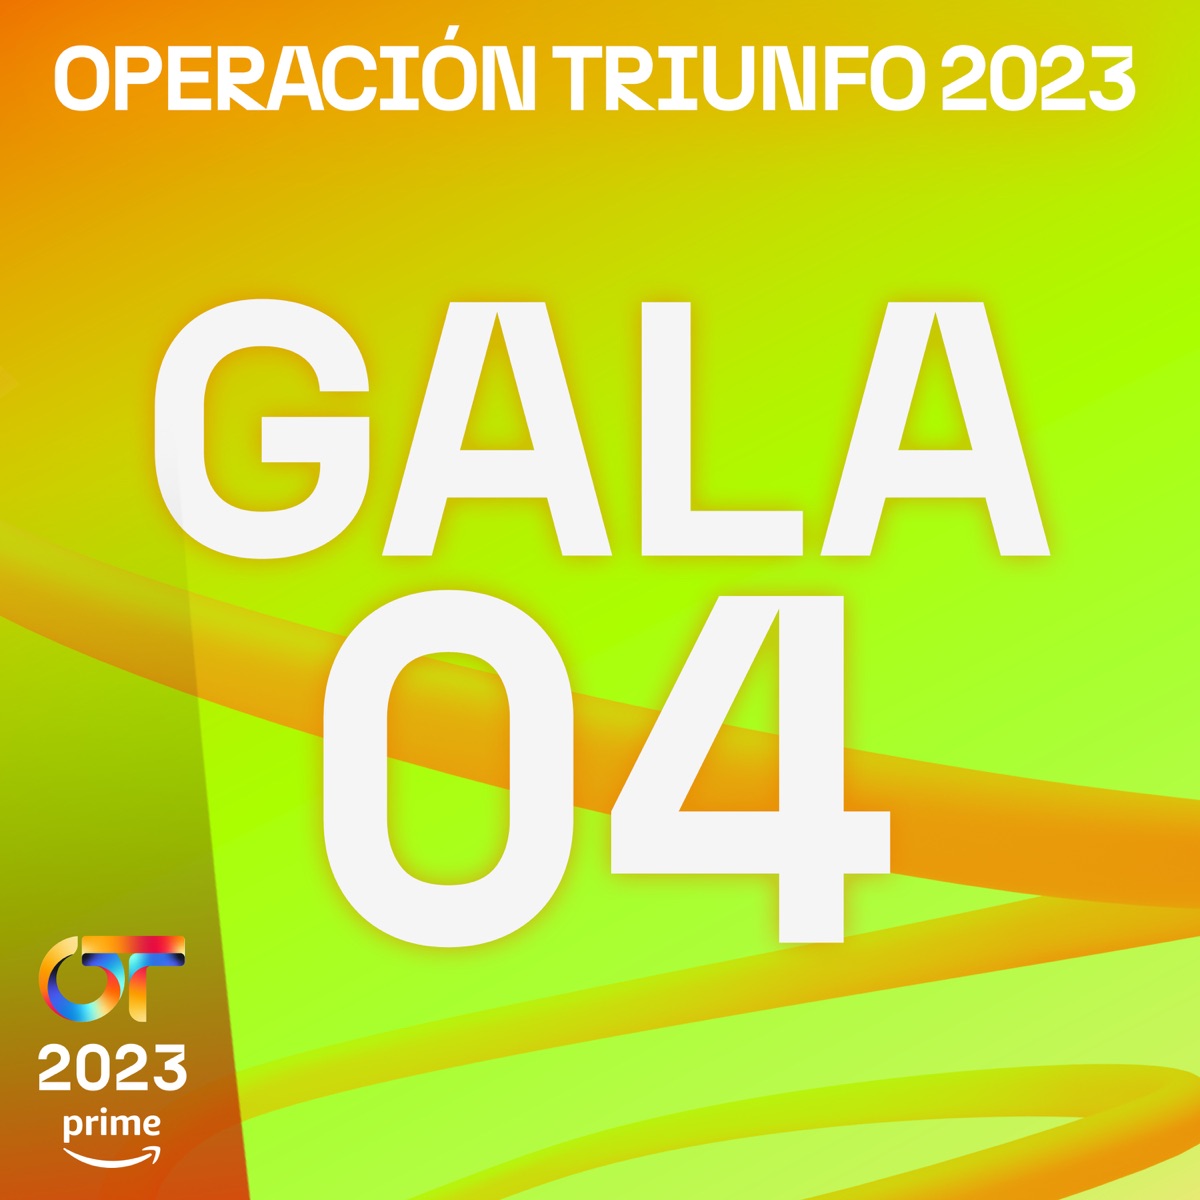 OT Gala 5 (Operación Triunfo 2020) - Album by Various Artists - Apple Music